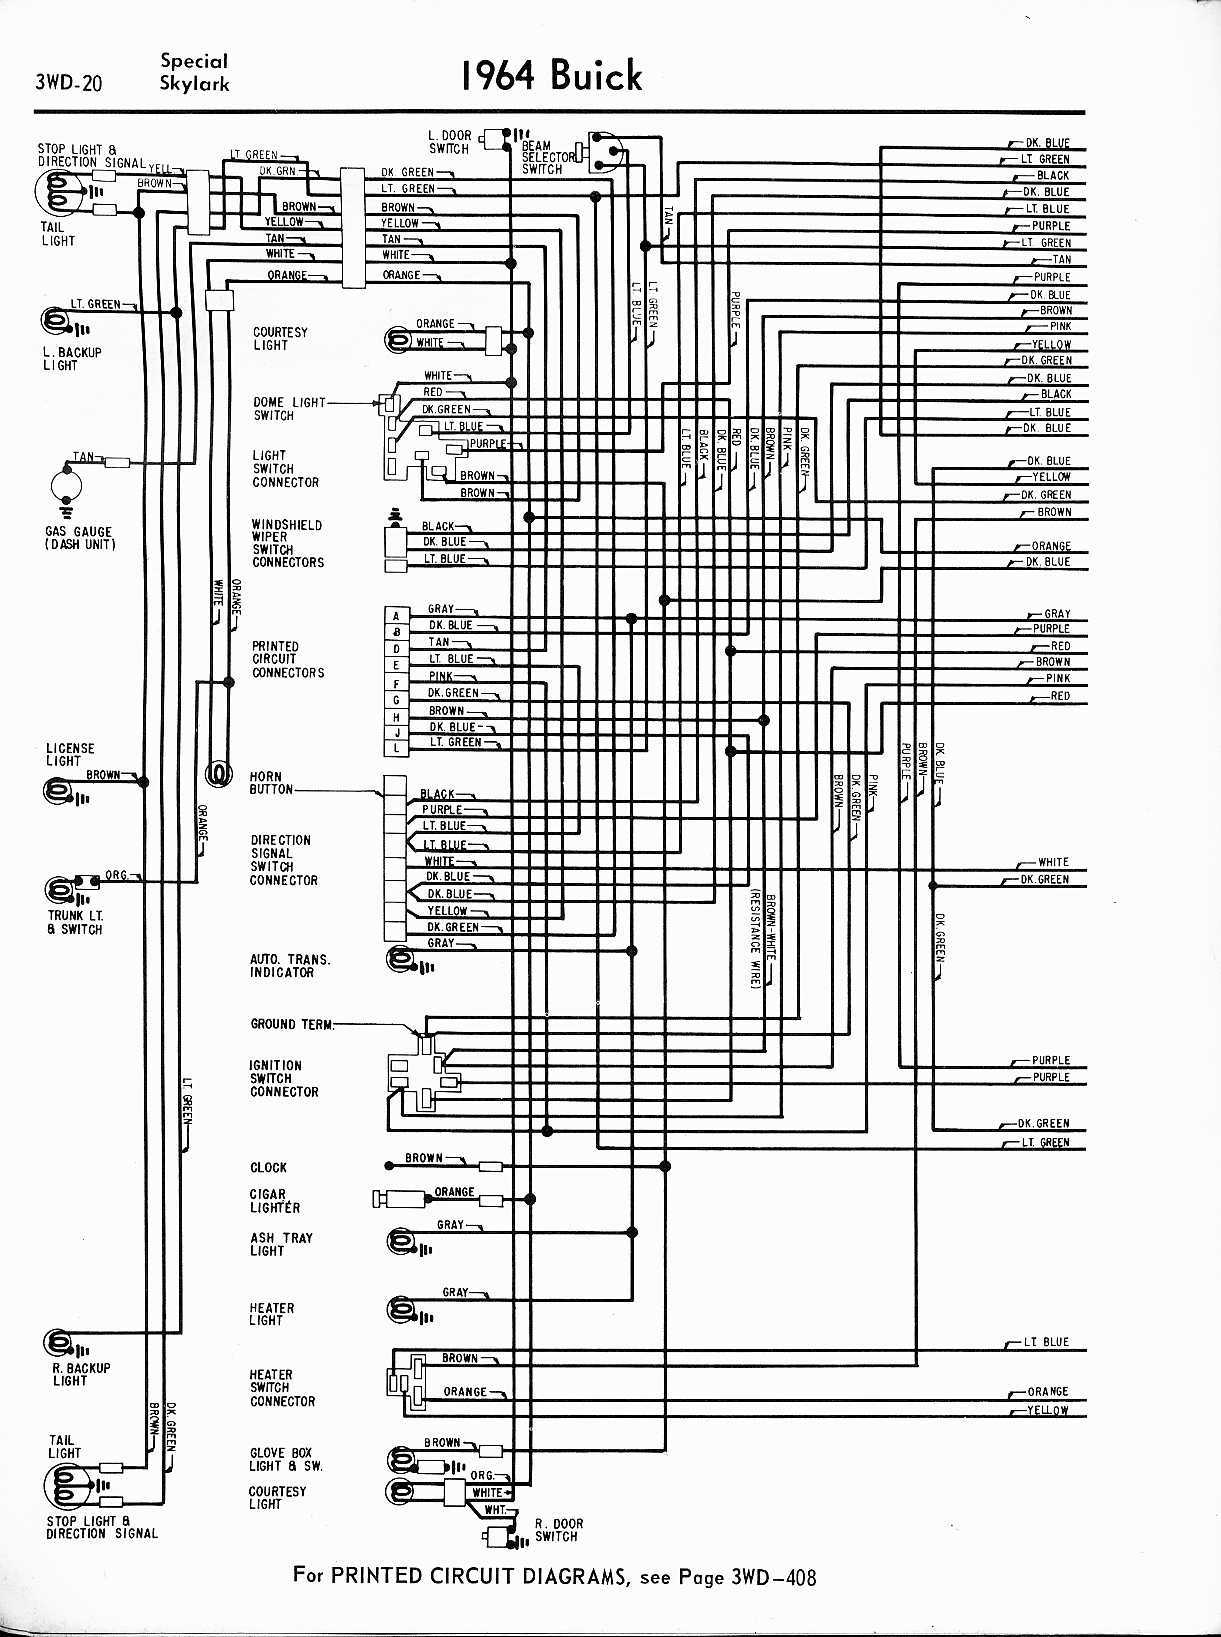 Buick Wiring Diagrams: 1957-1965 1964 impala tail light wiring diagram 